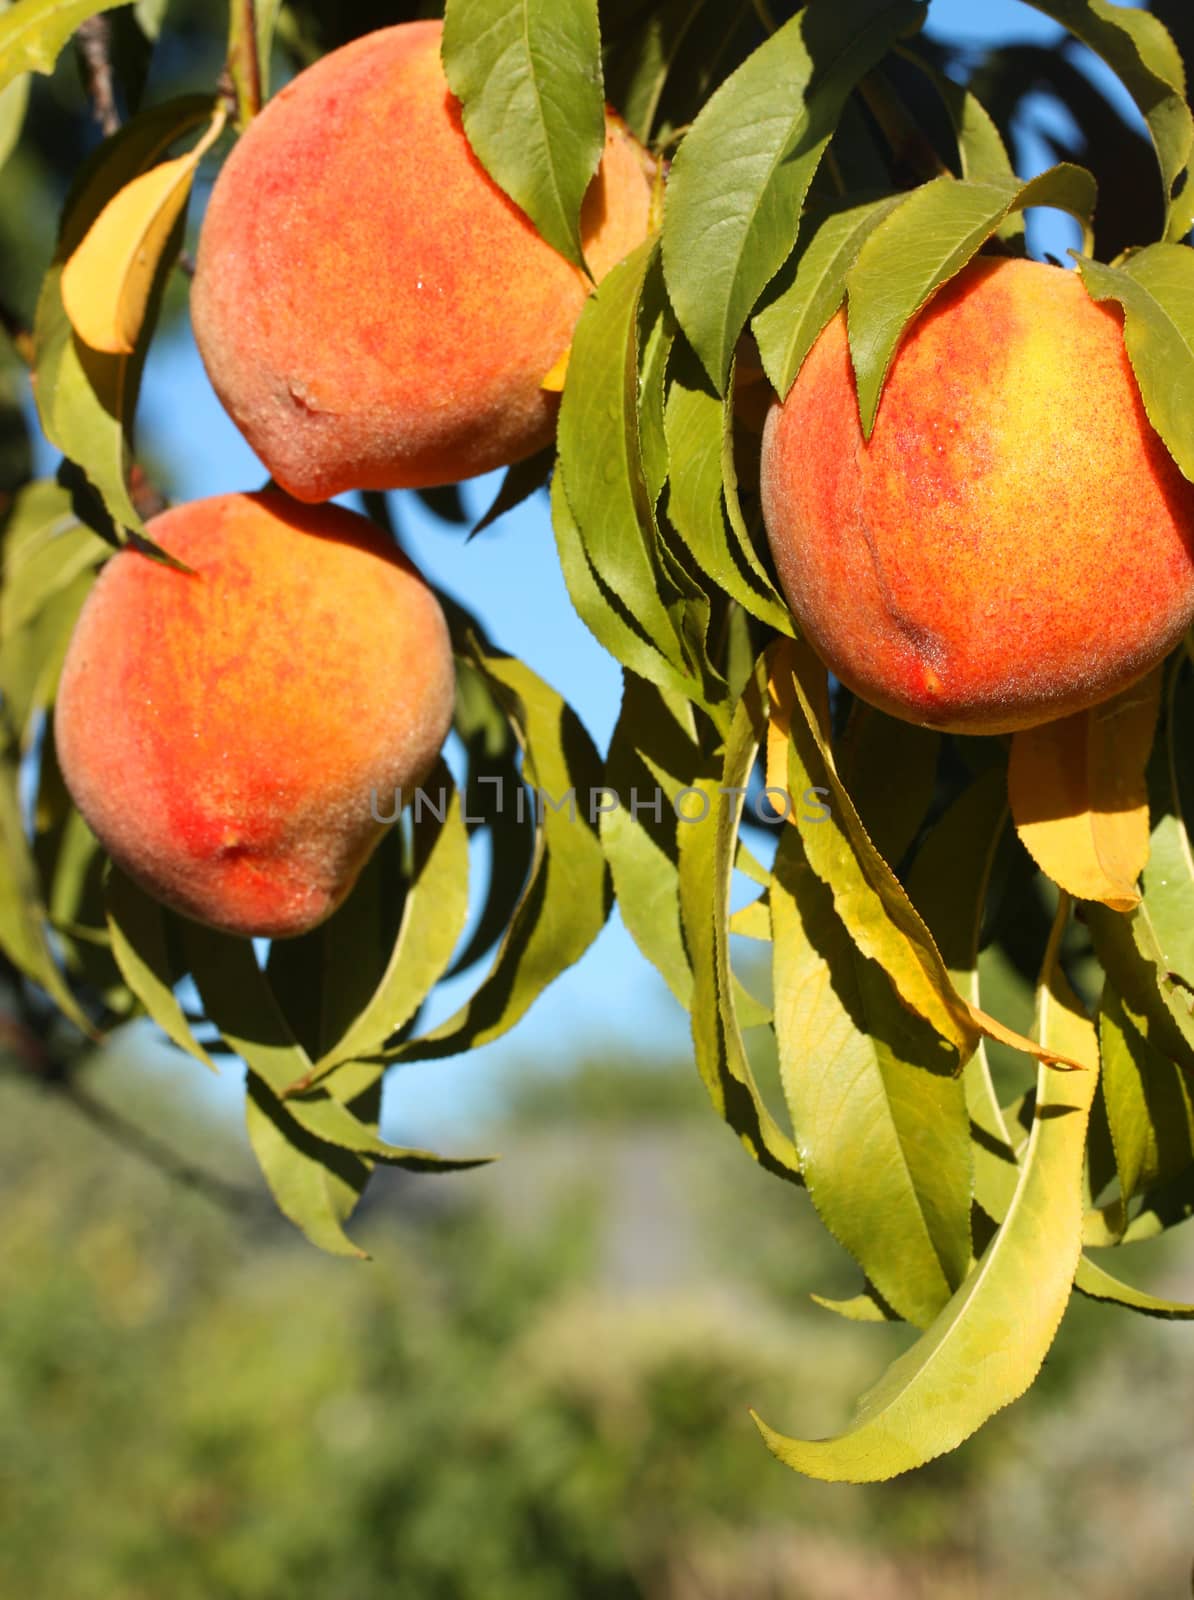 Ripe peaches on tree branch